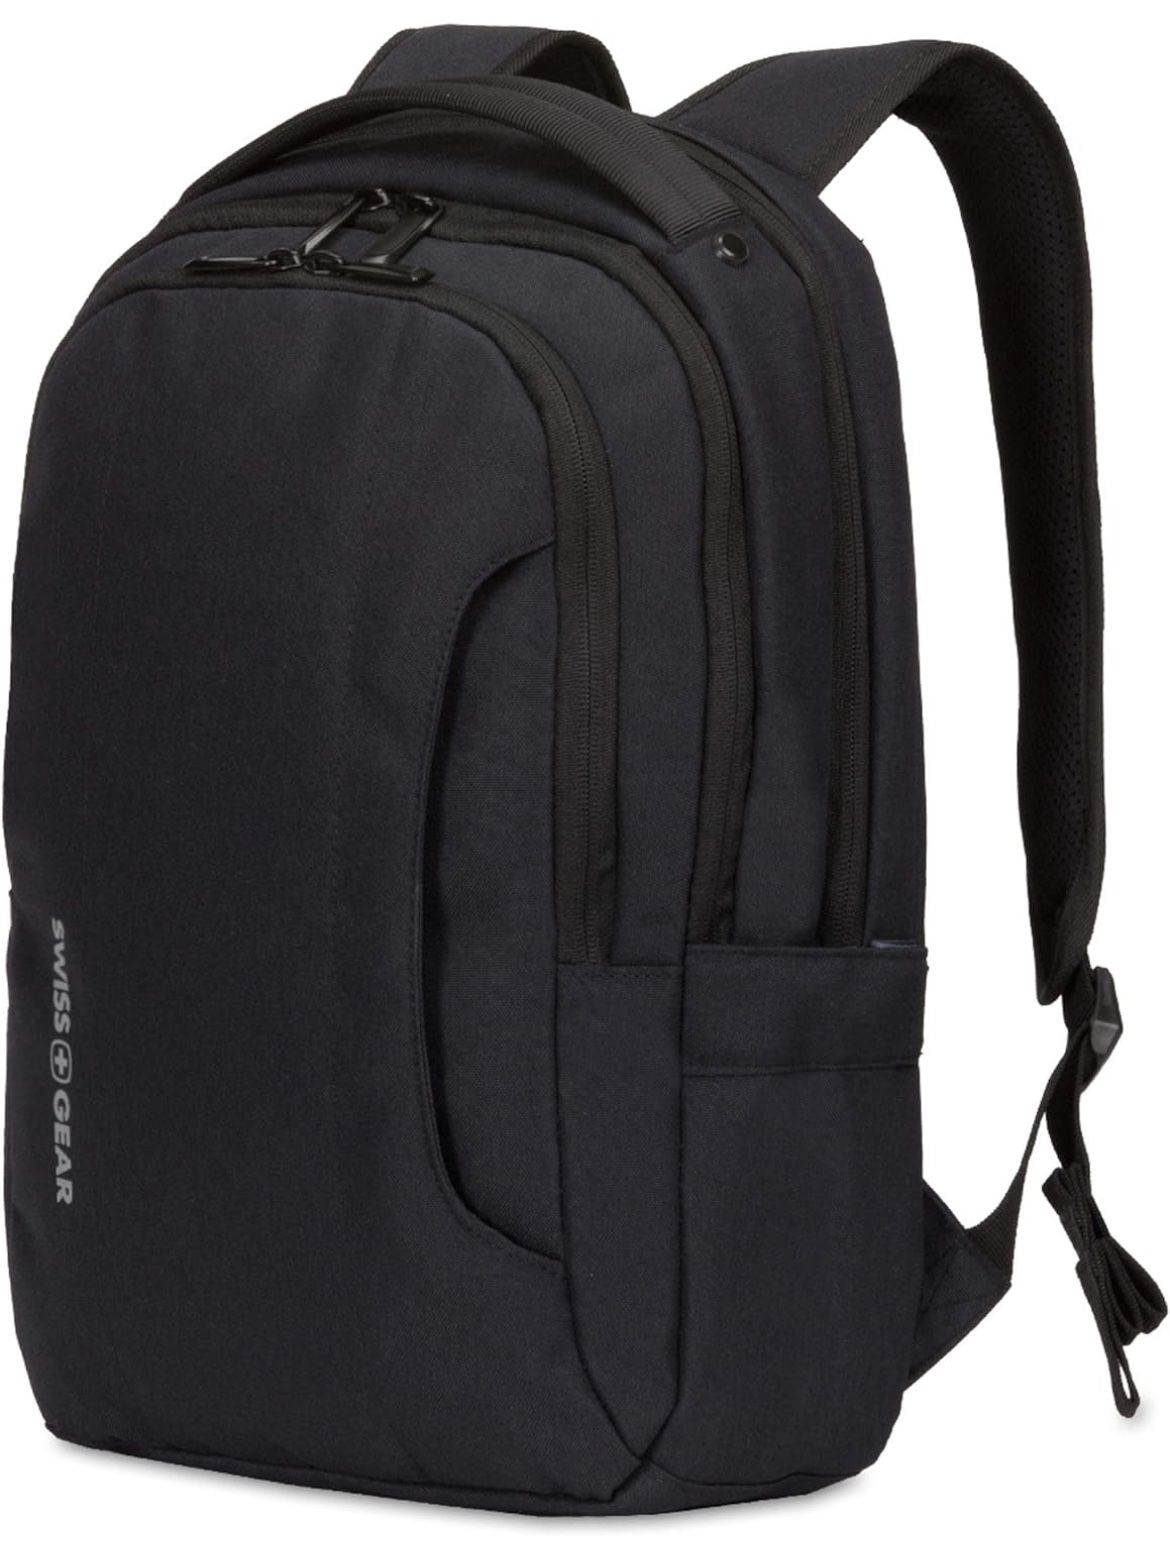 SwissGear 3573 Compact Laptop Backpack, Black, 17-Inch